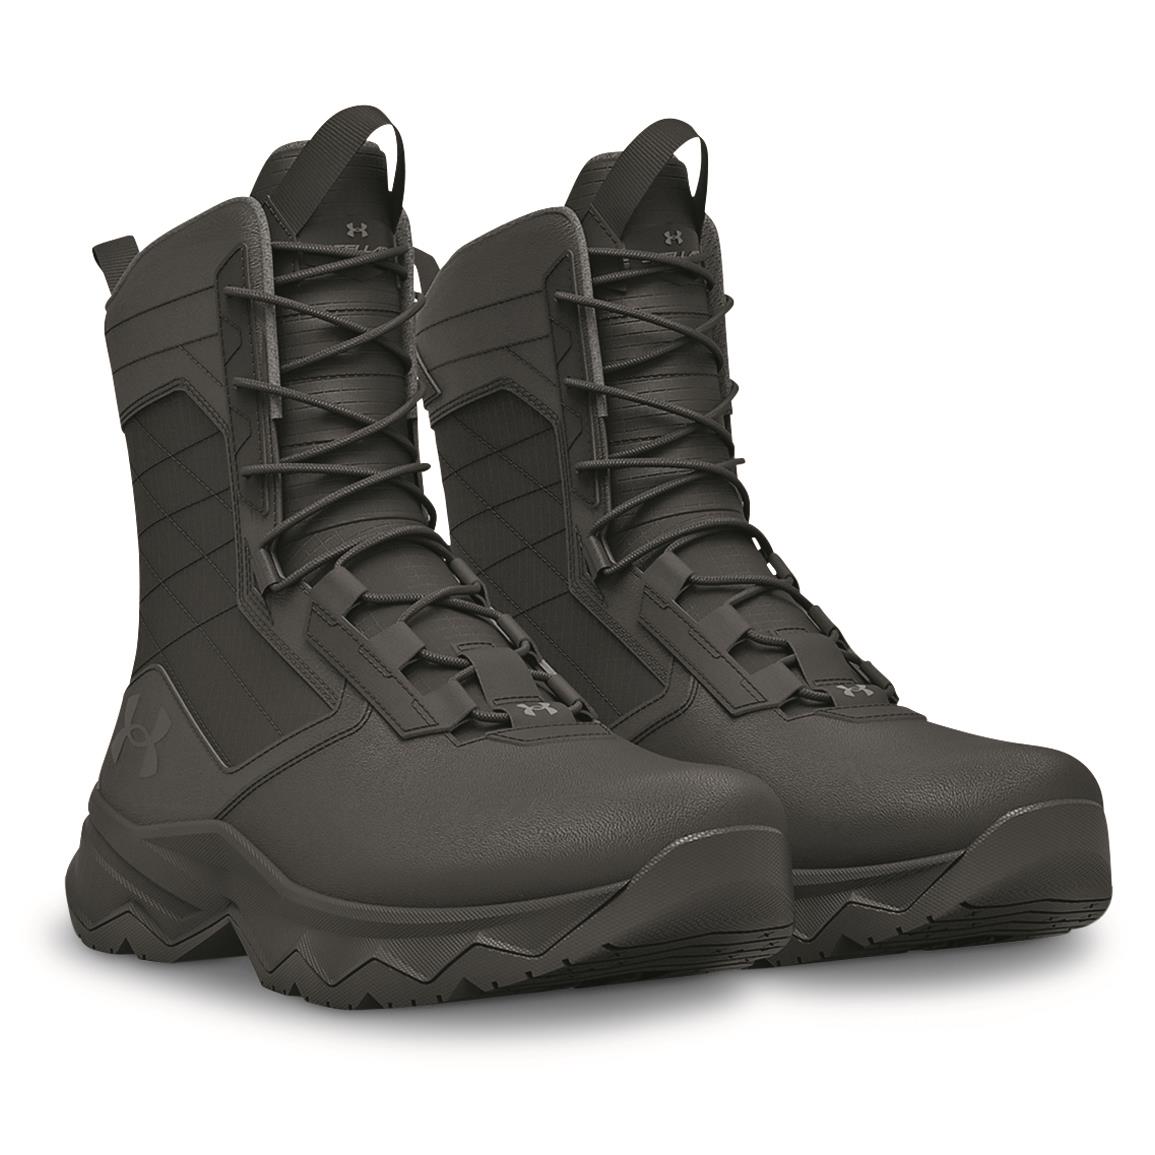 Under Armour Men's Stellar G2 Waterproof Tactical Boots, Black/Black/Pitch Gray